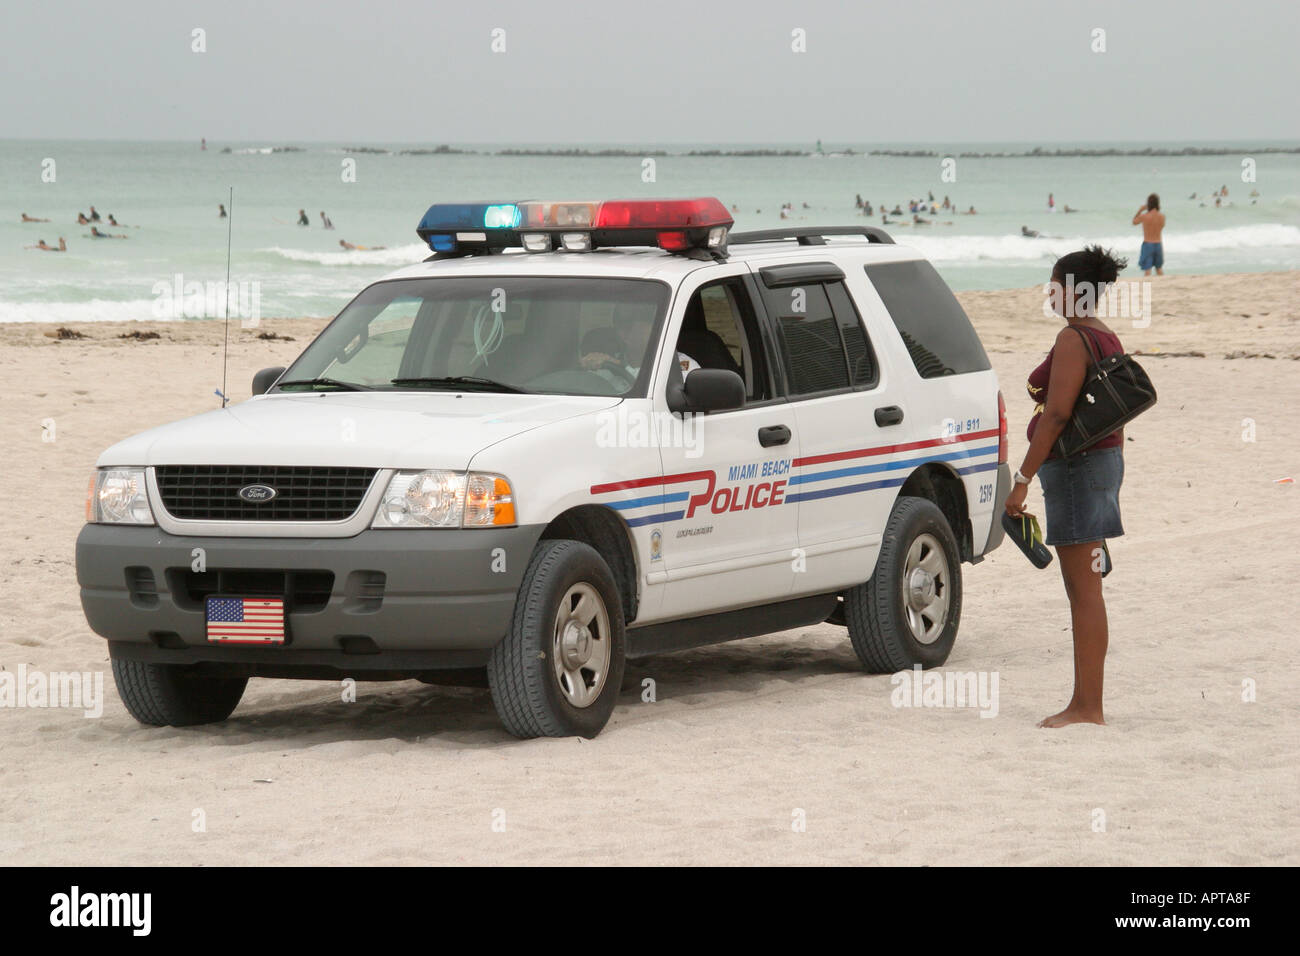 Miami Beach Florida,Atlantic Shore,shoreline,coast,coastline,seashore,weather,Hurricane Jeanne approaching,law enforcement,police SUV,warns,Black Blac Stock Photo